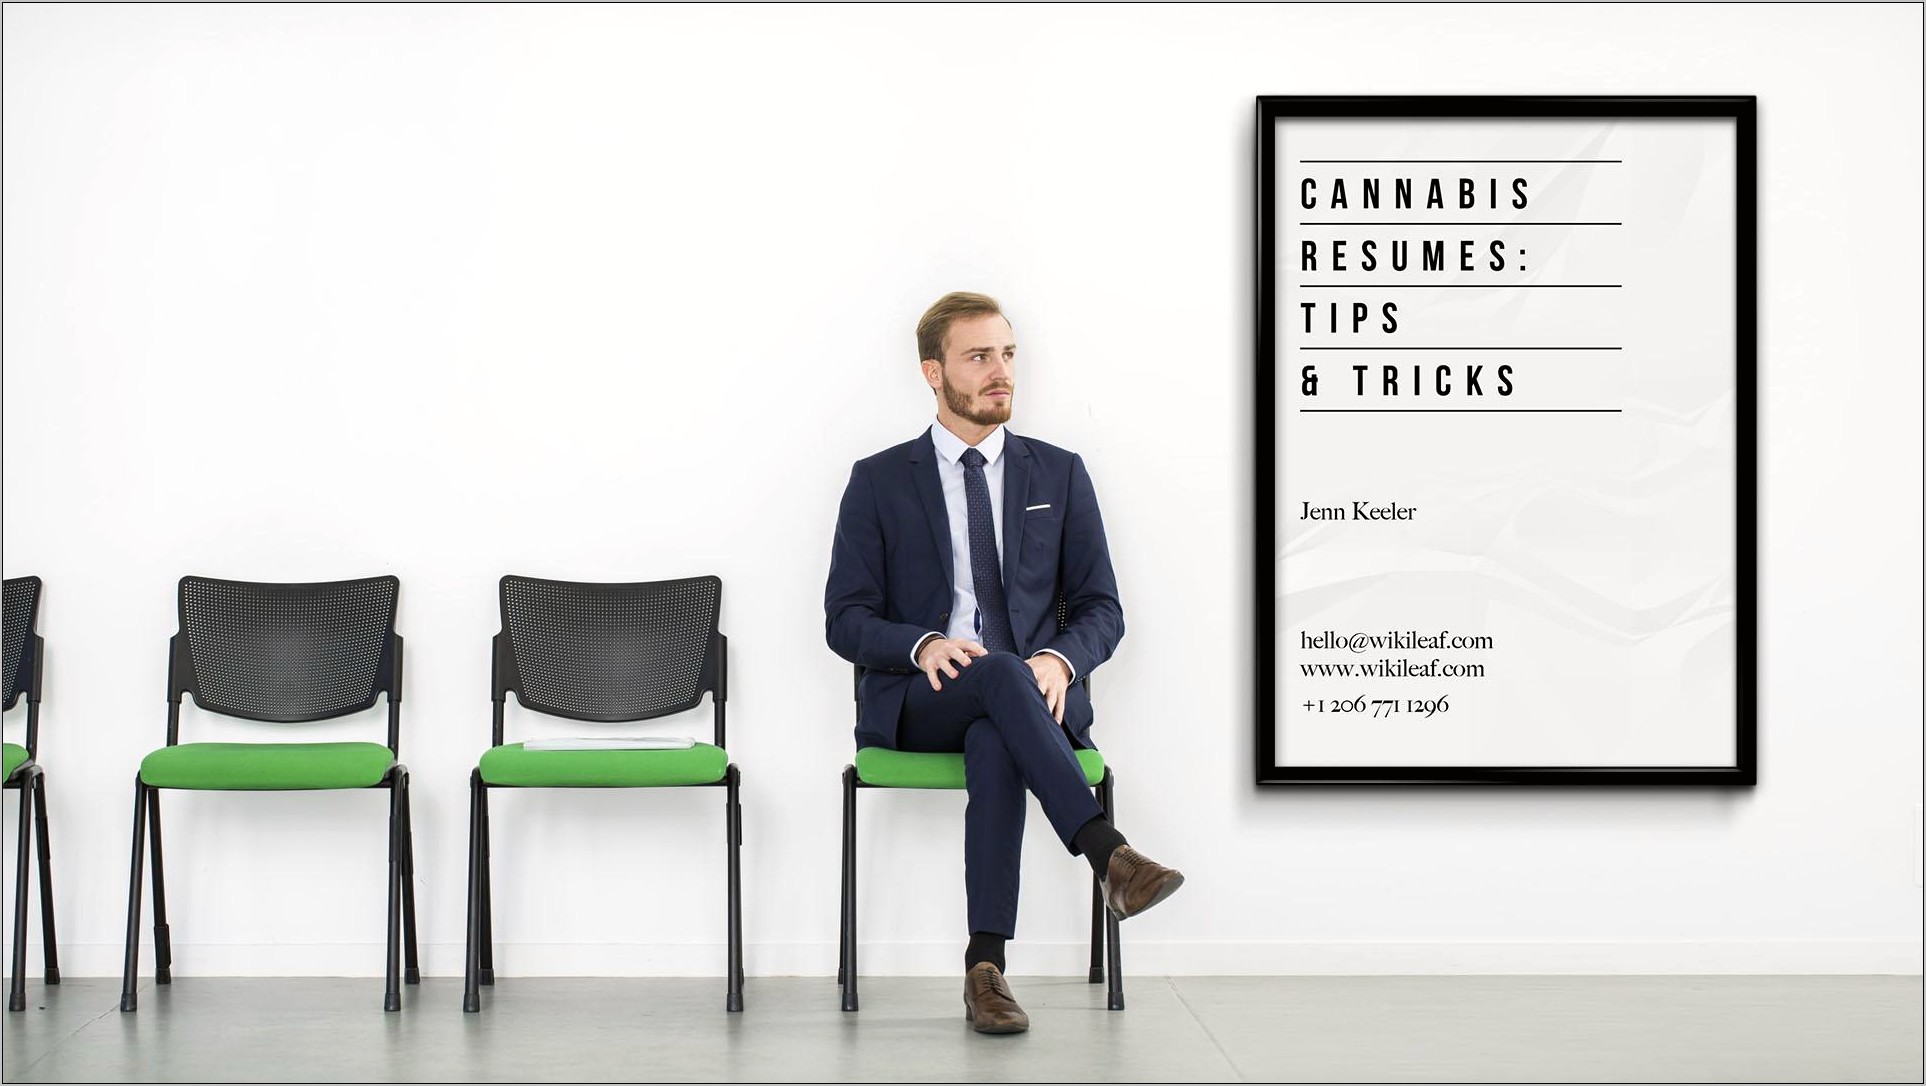 Resume For Cannabis Jobs Wshington